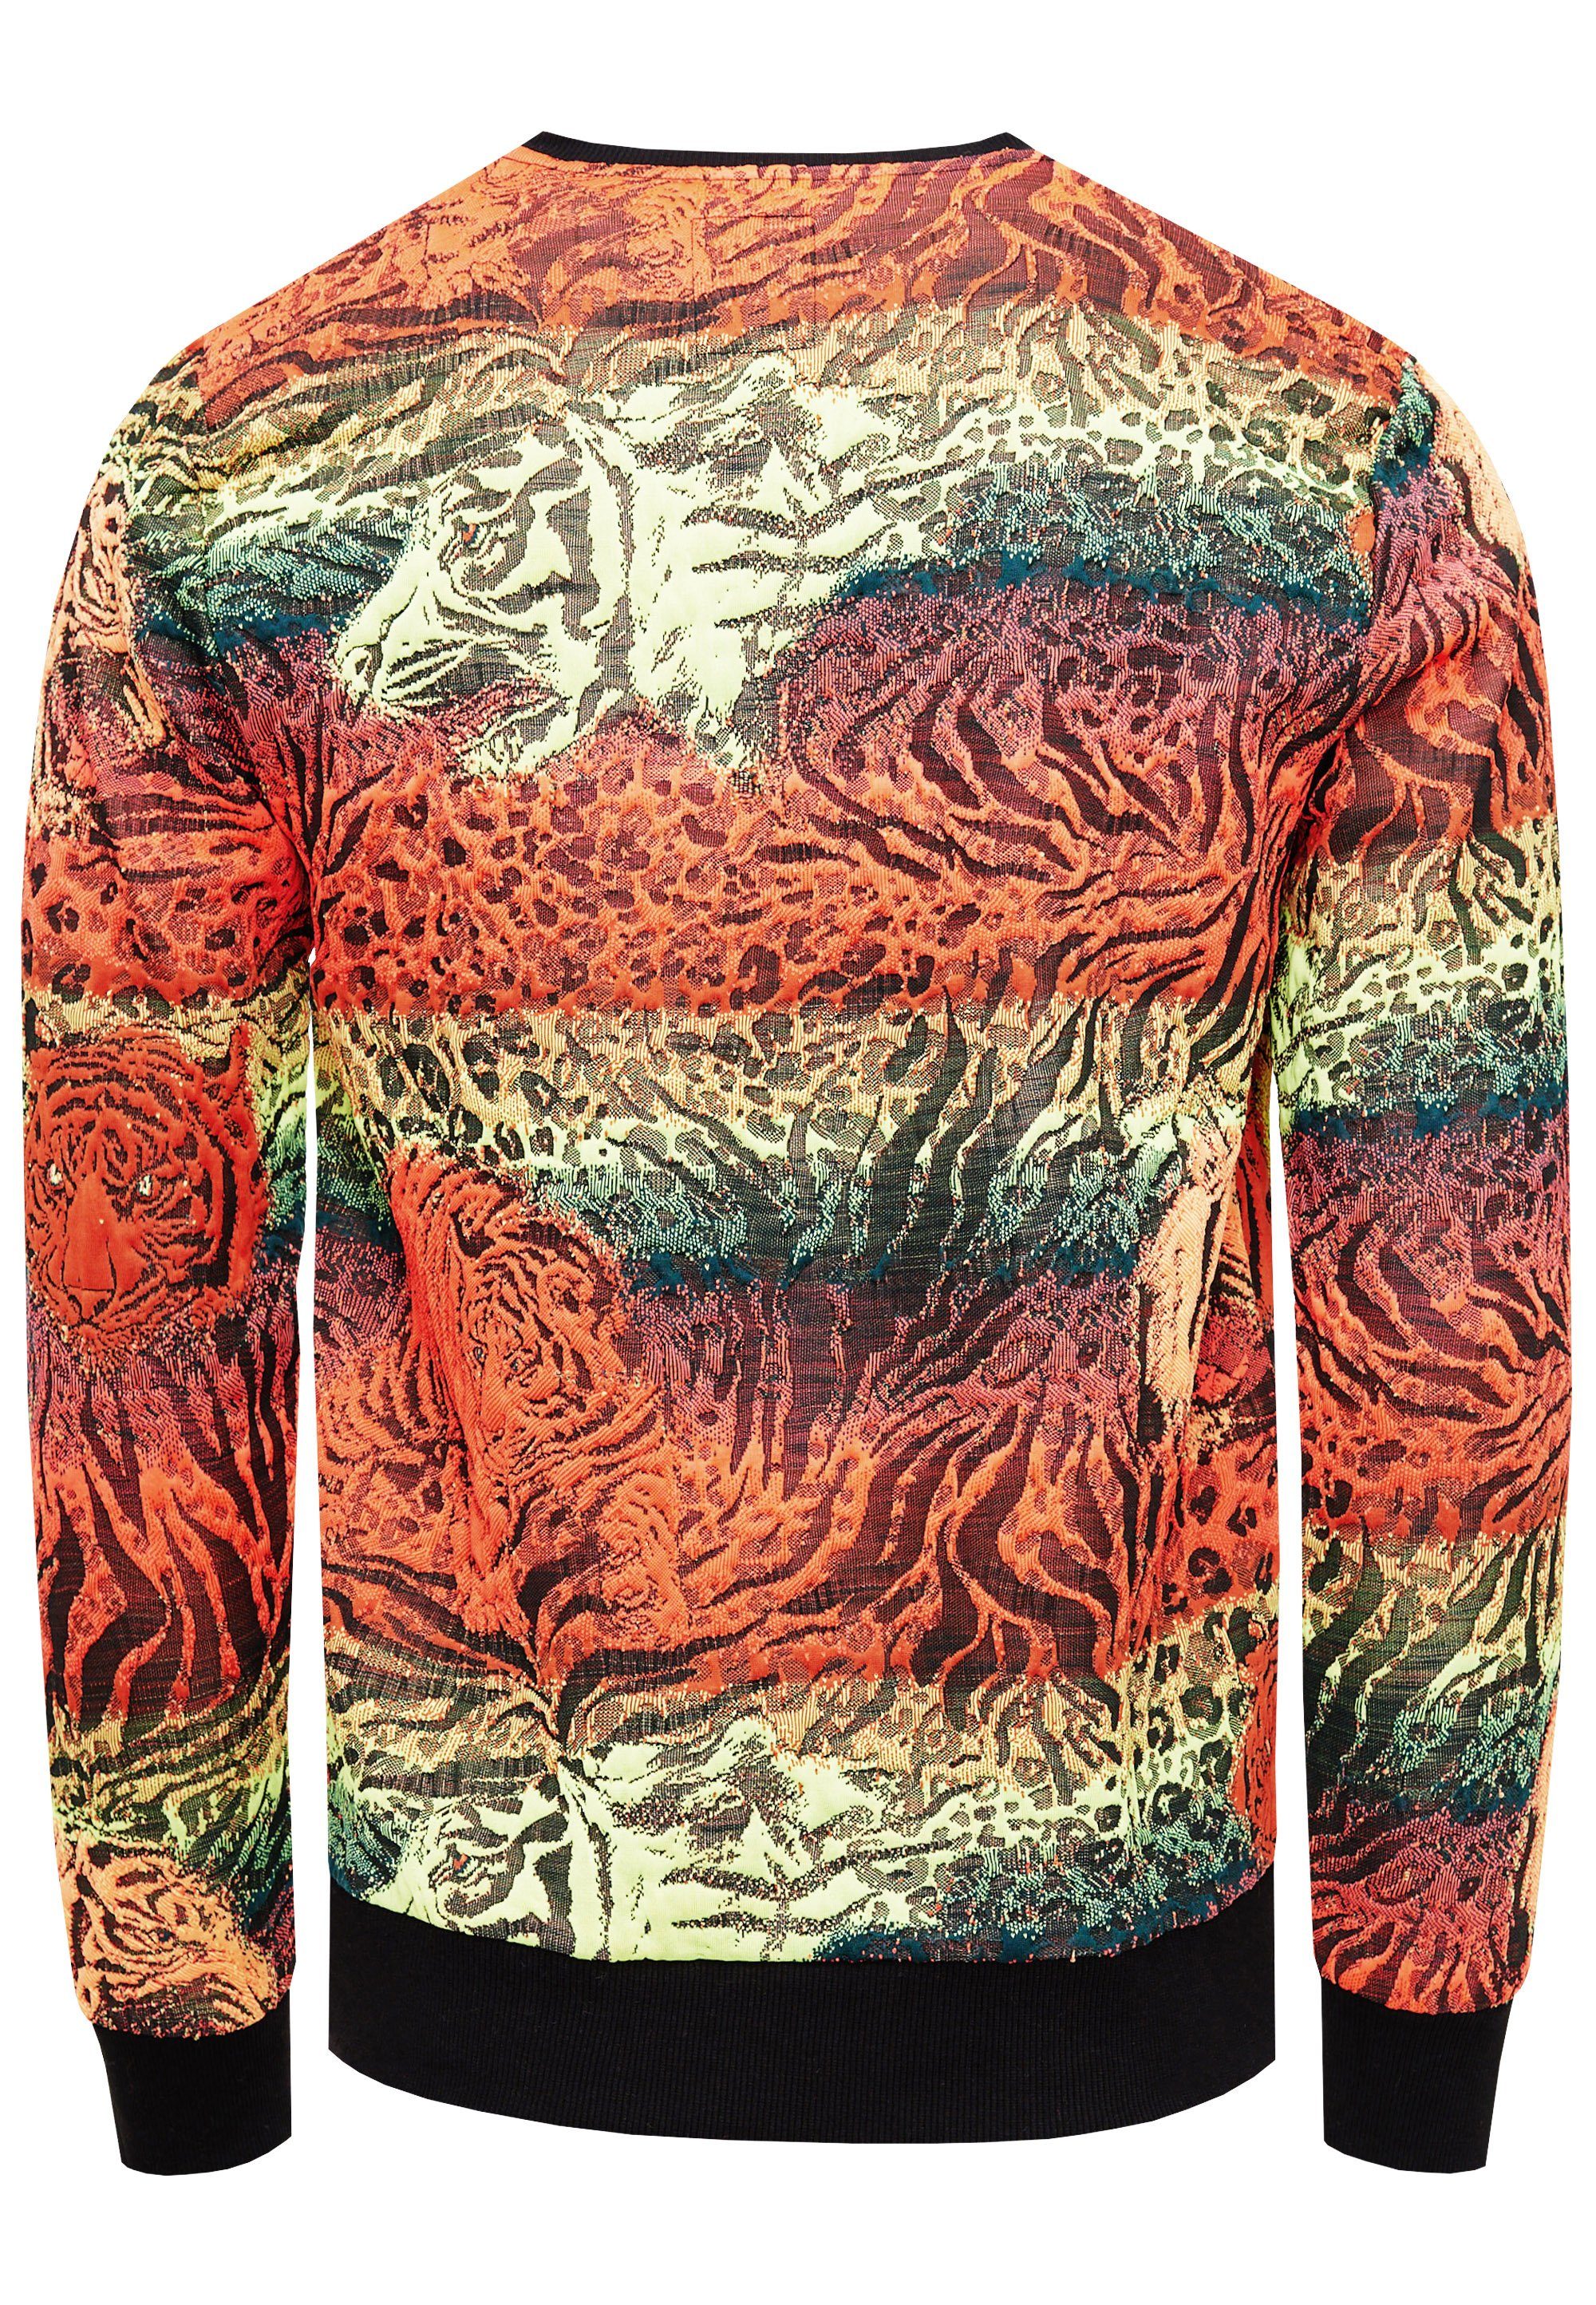 Rusty Neal Rusty im trendigen Neal Sweater Tiger-Design Sweatshirt